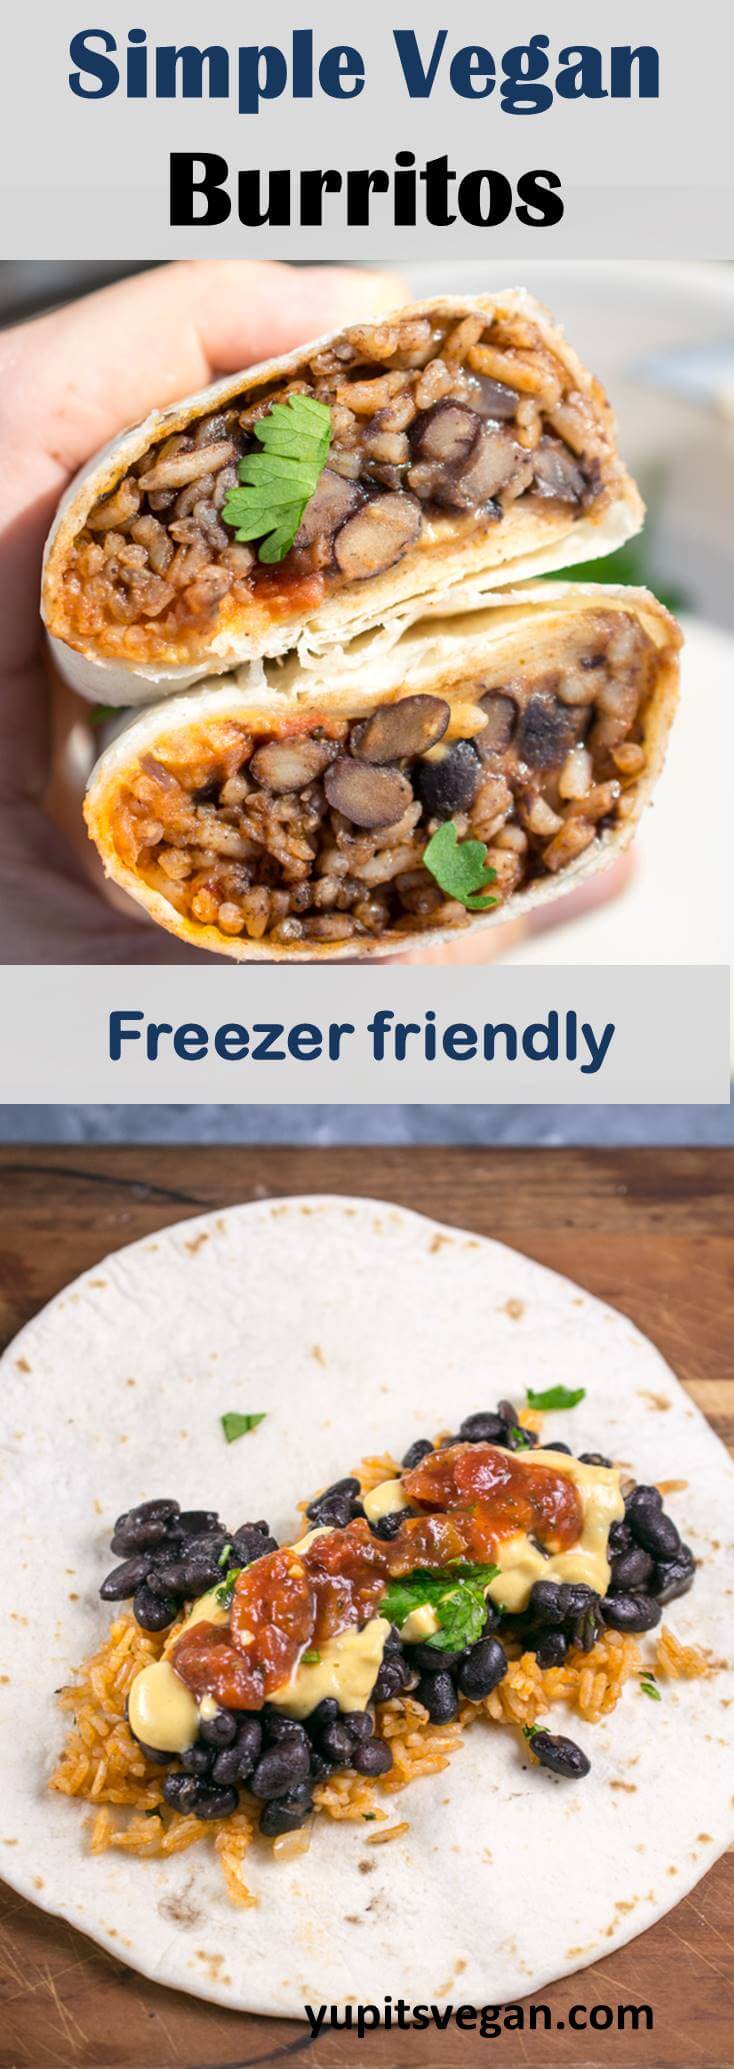 Vegan Burritos - Make and Freeze! | Yup, it's Vegan